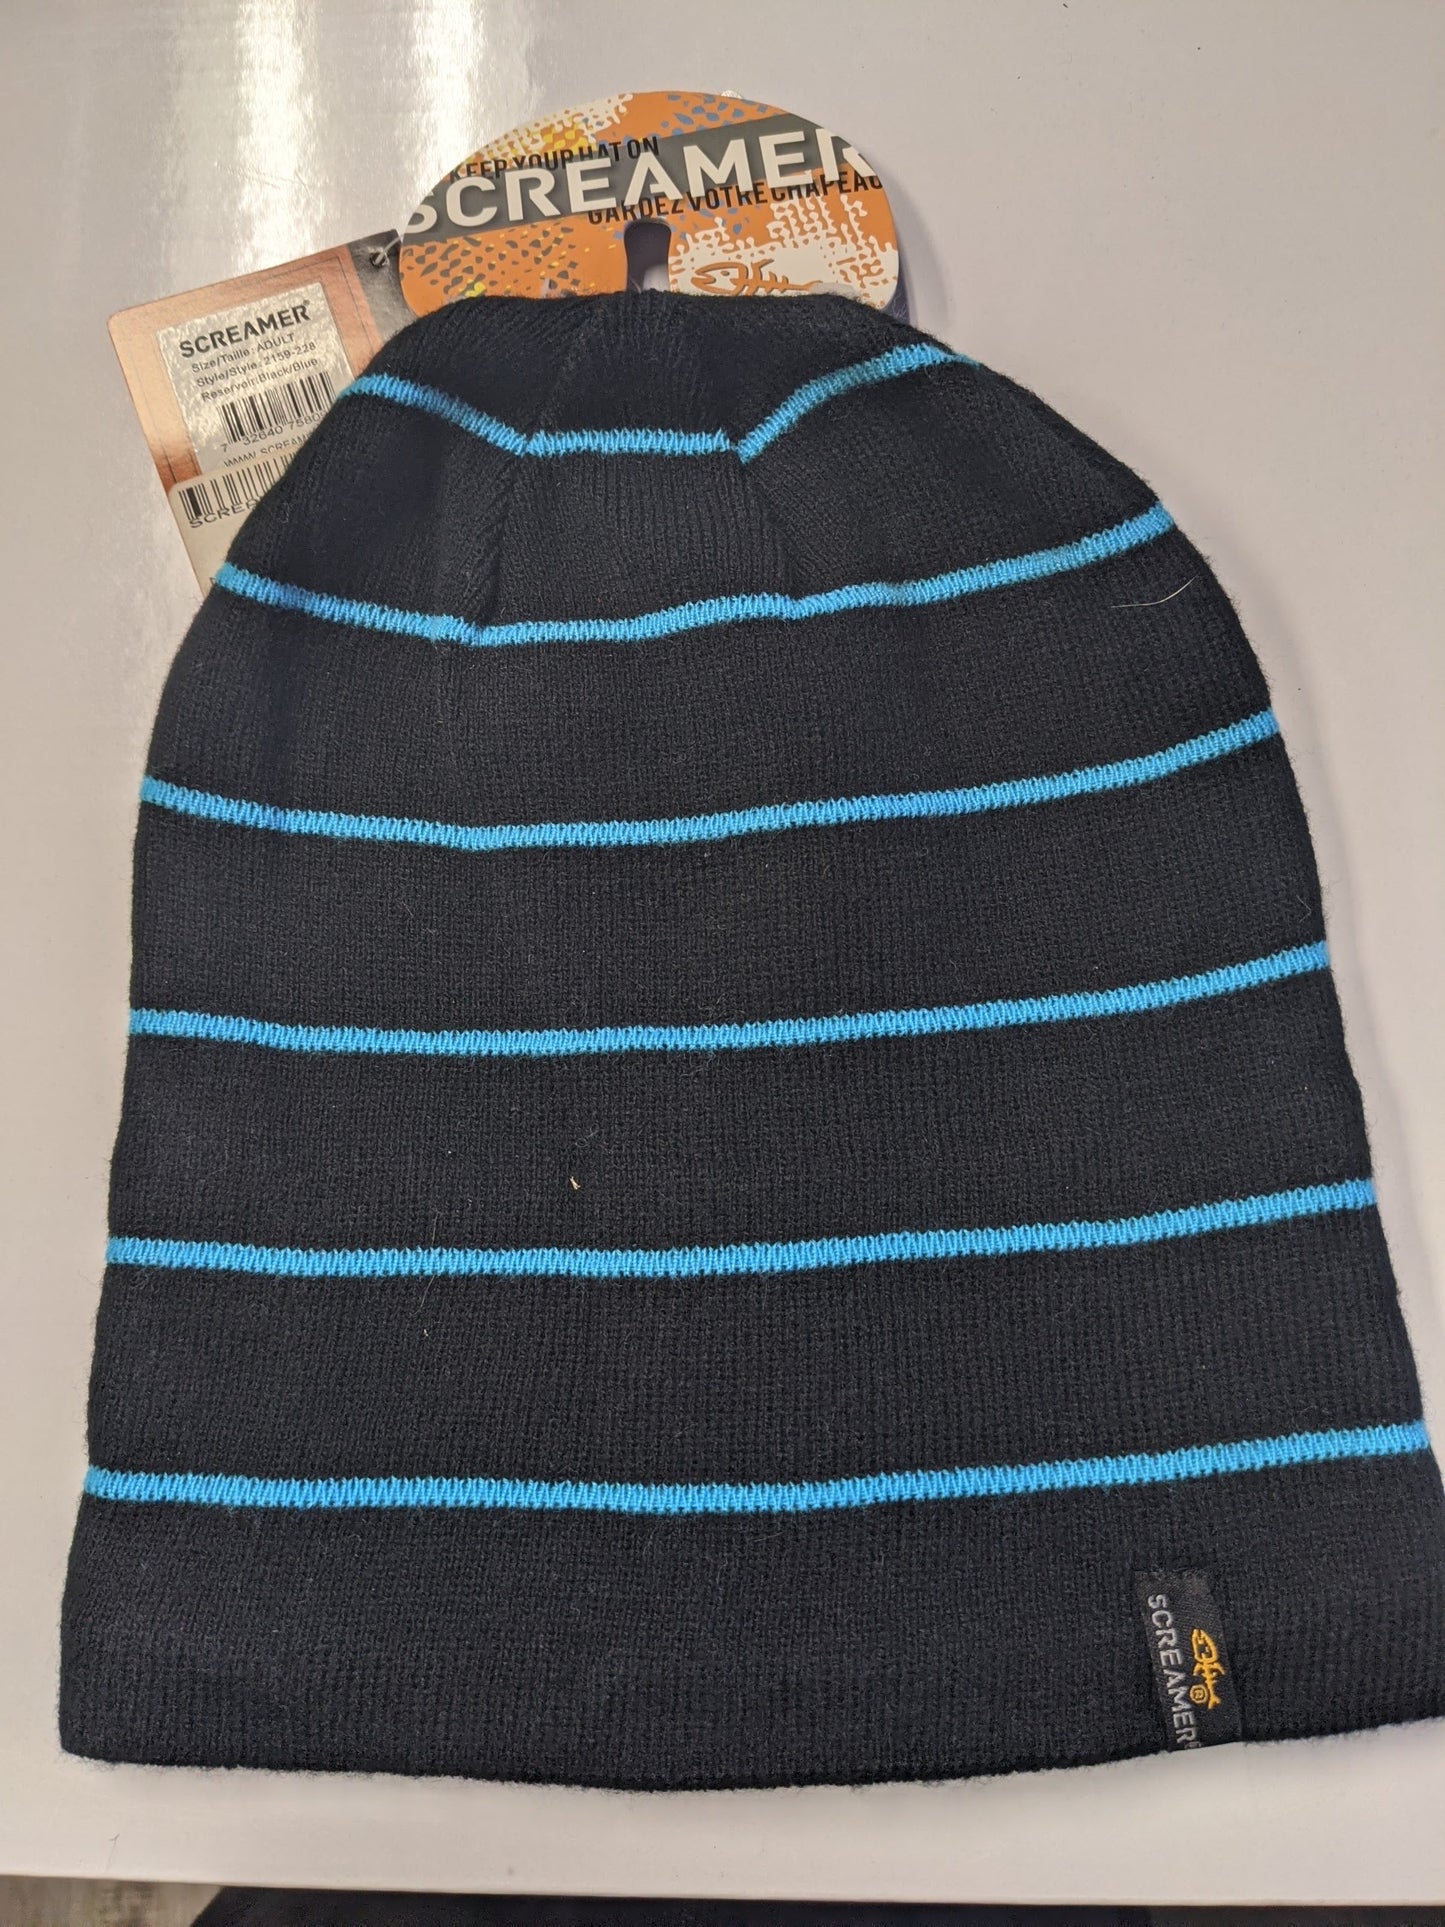 Screamer Winter Hat, One Size, Multicolored, New